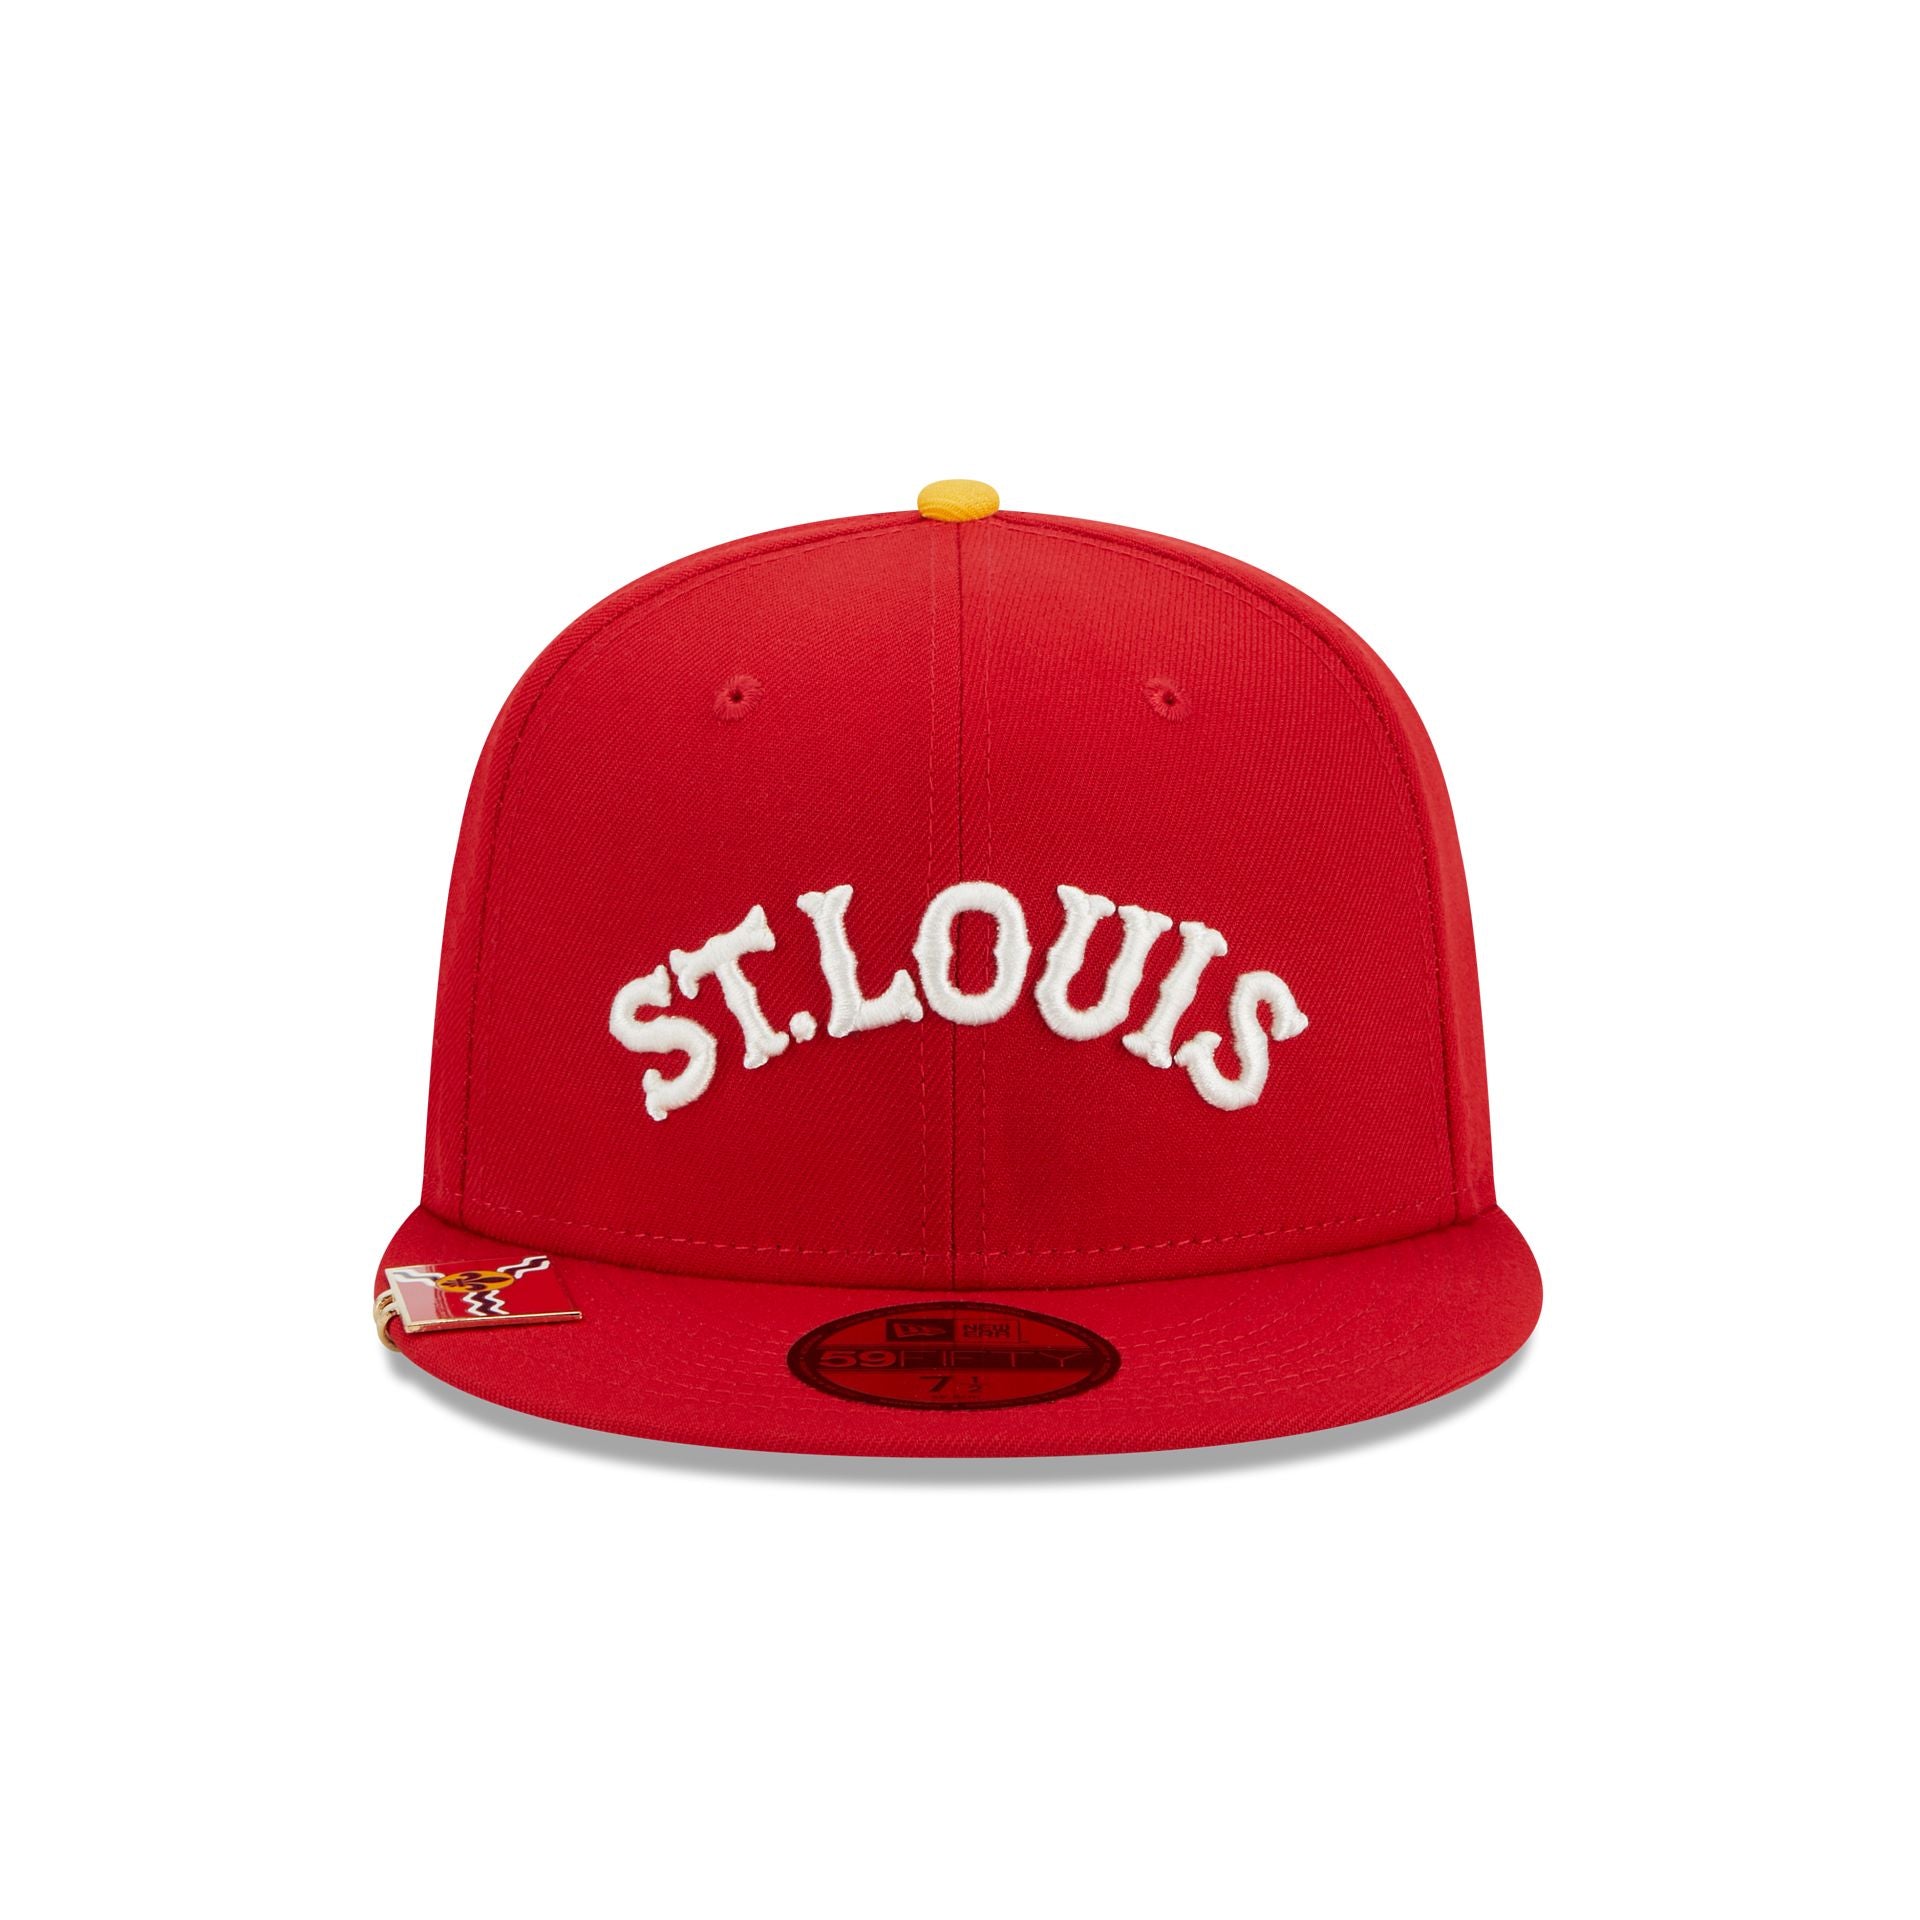 St. Louis Cardinals Orange and White Basic STL Orange UV New Era 59FIFTY Fitted  Hat